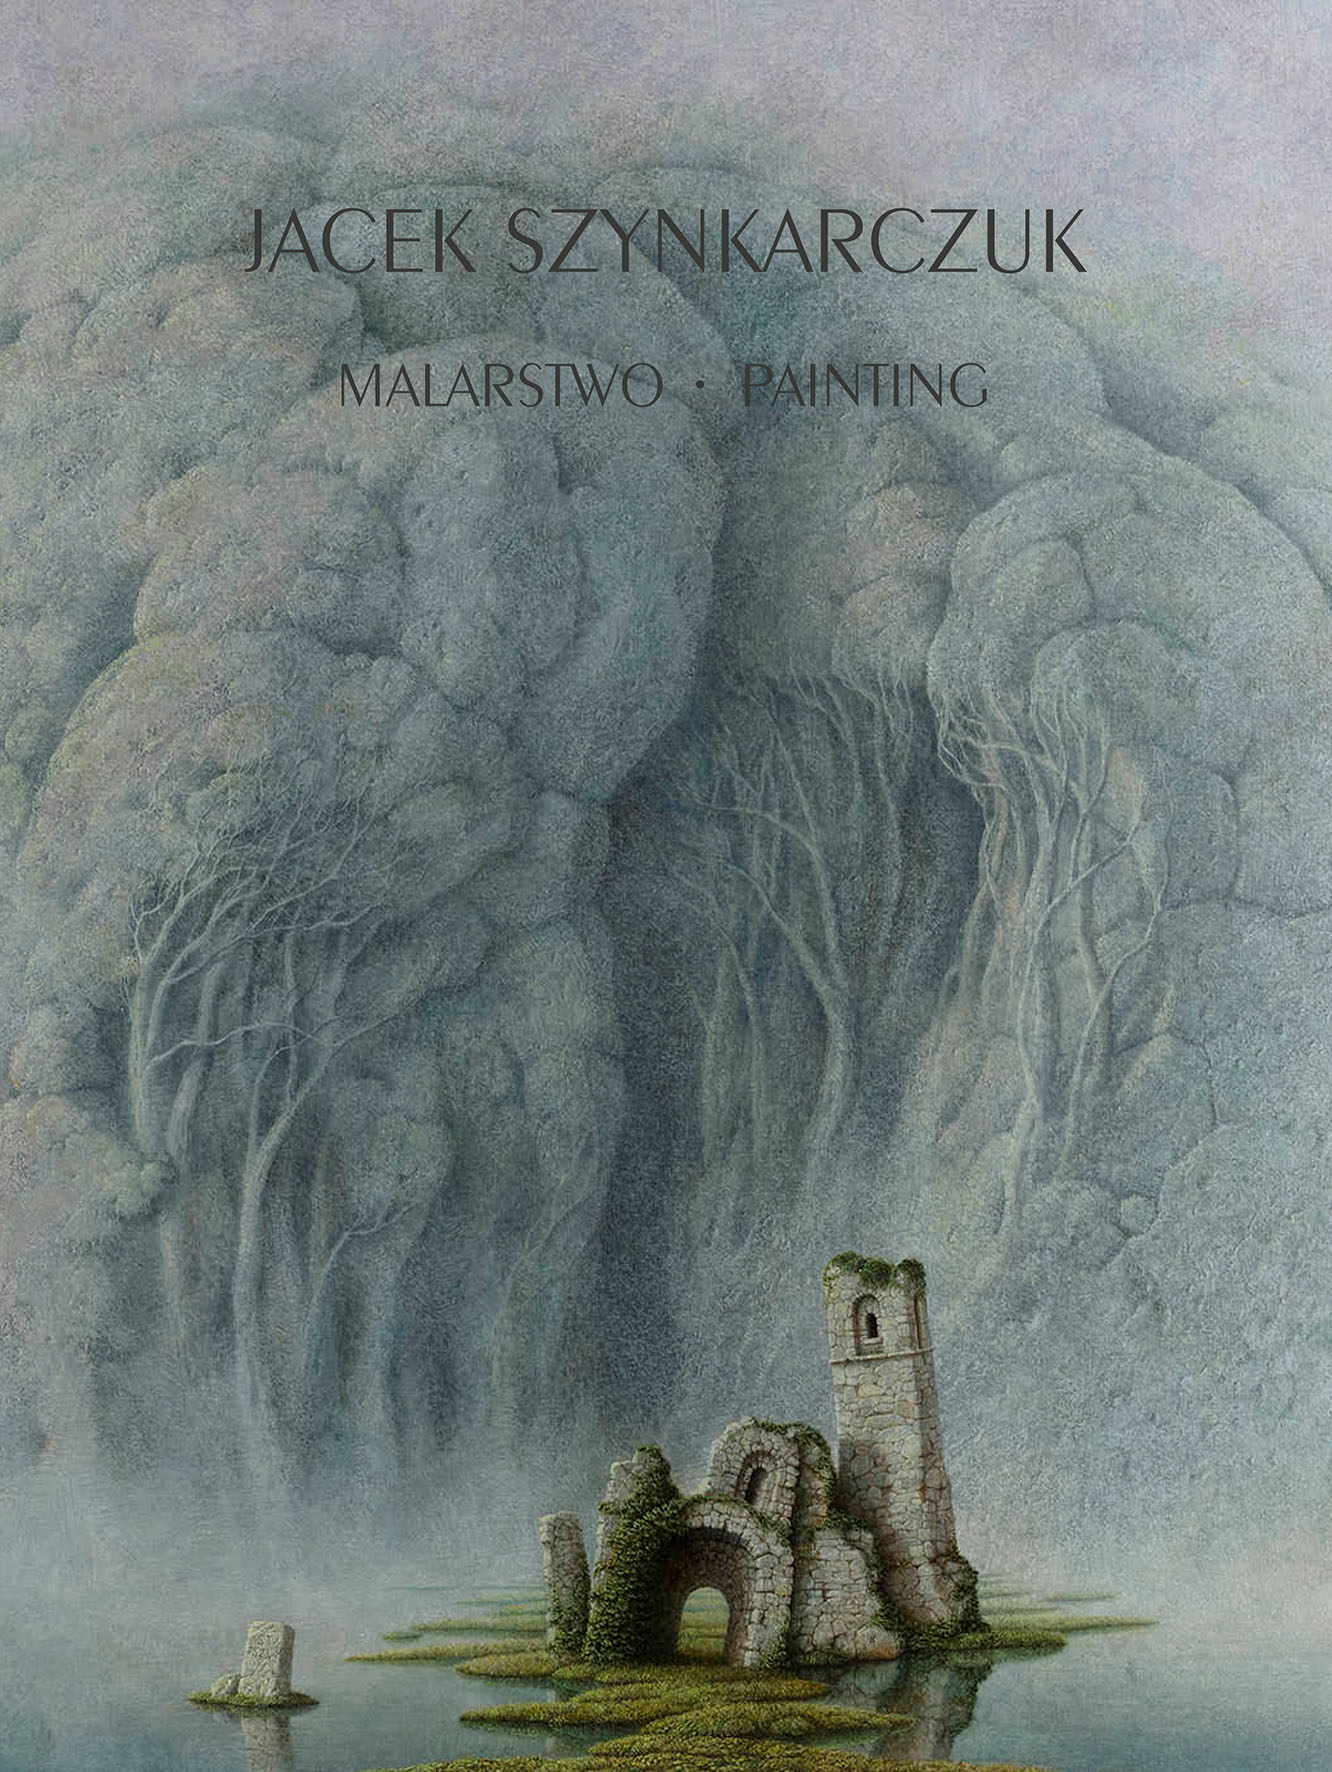 Jacek Szynkarczuk. Malarstwo | Painting